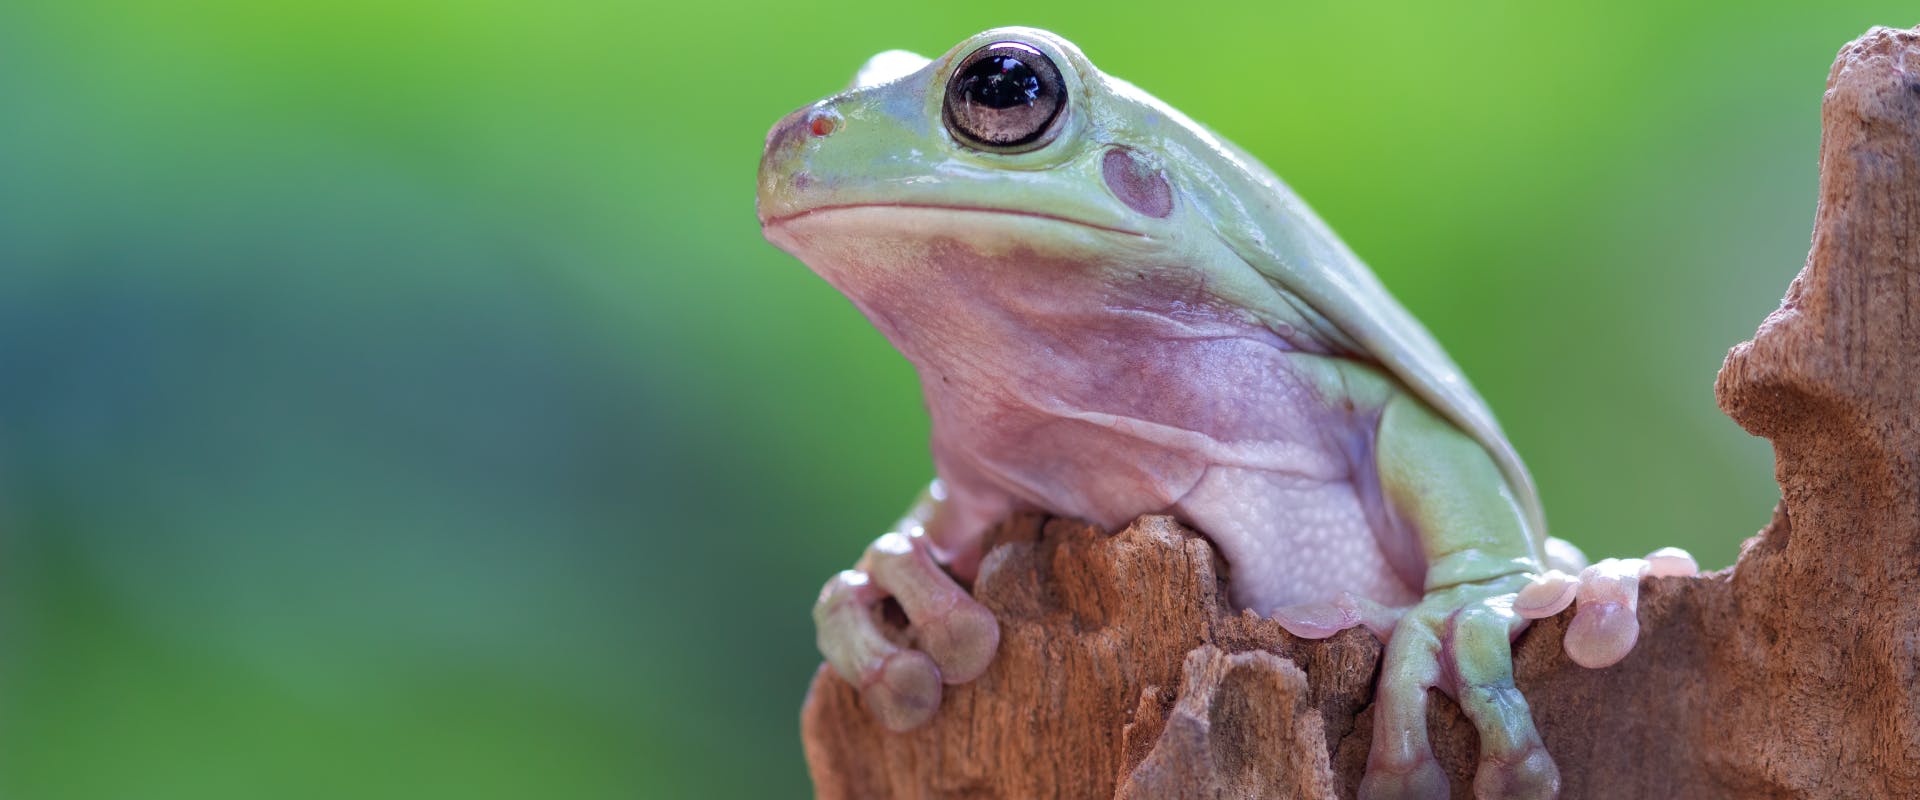 a green tree frog perched on a log inside a pet amphibian tank